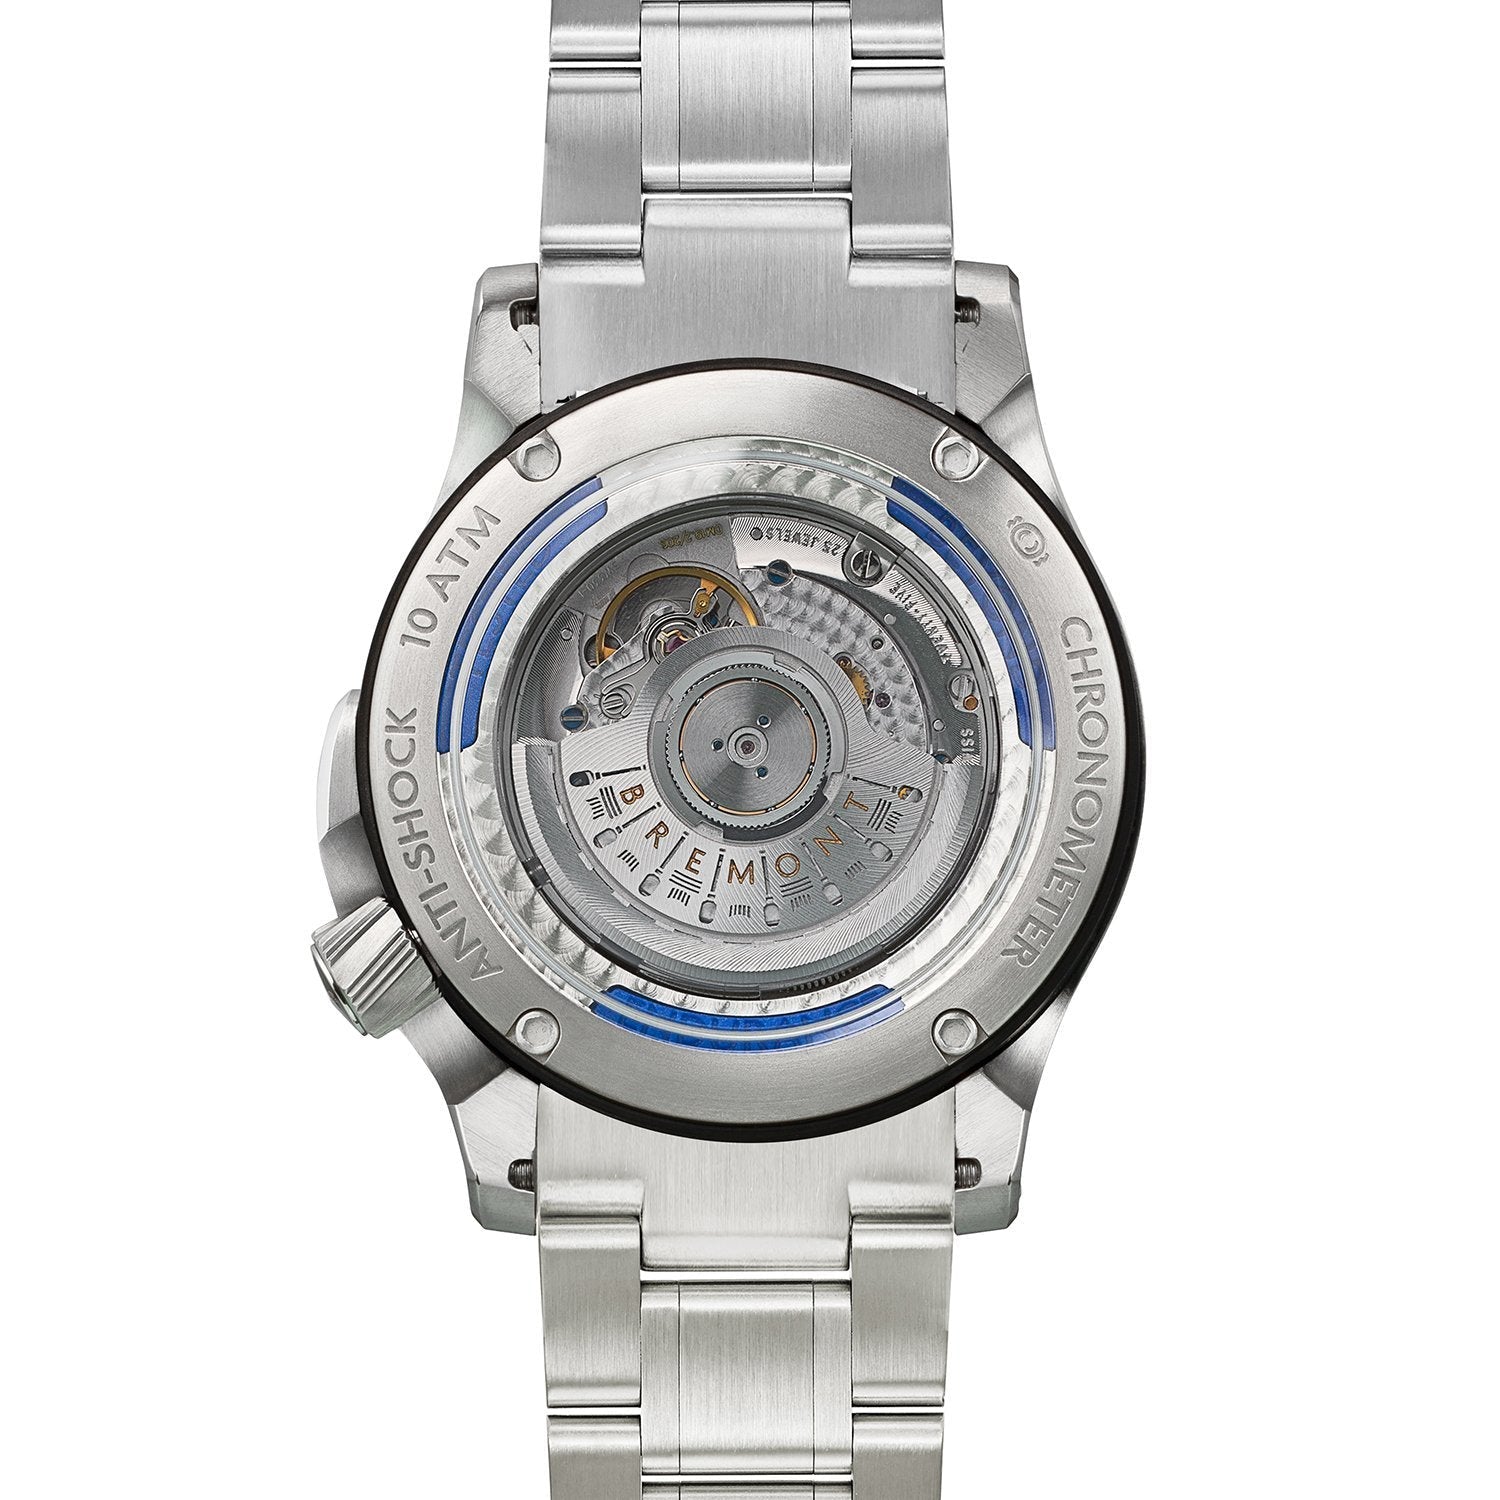 Bremont Chronometers Watches | Mens | IONBIRD ionBird